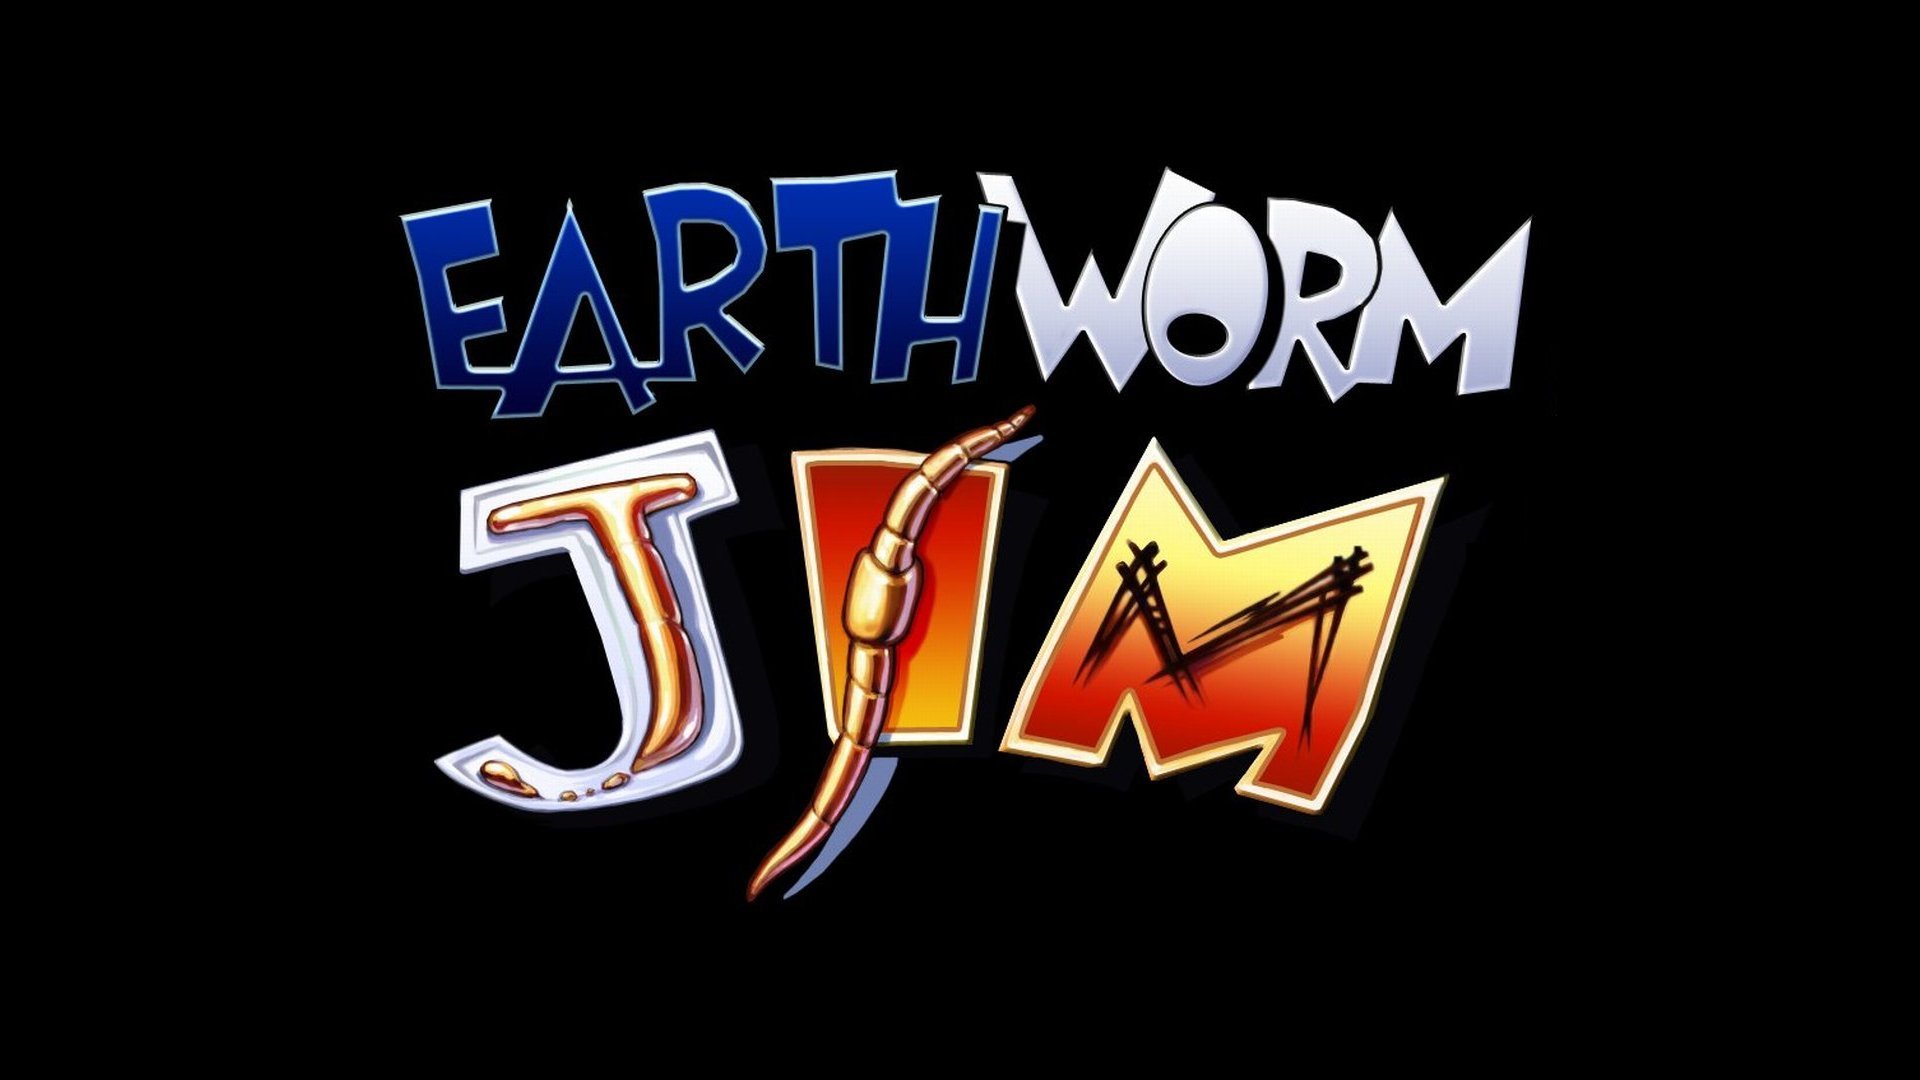 Earthworm Jim Adventure Animation Edy Cartoon Wallpaper